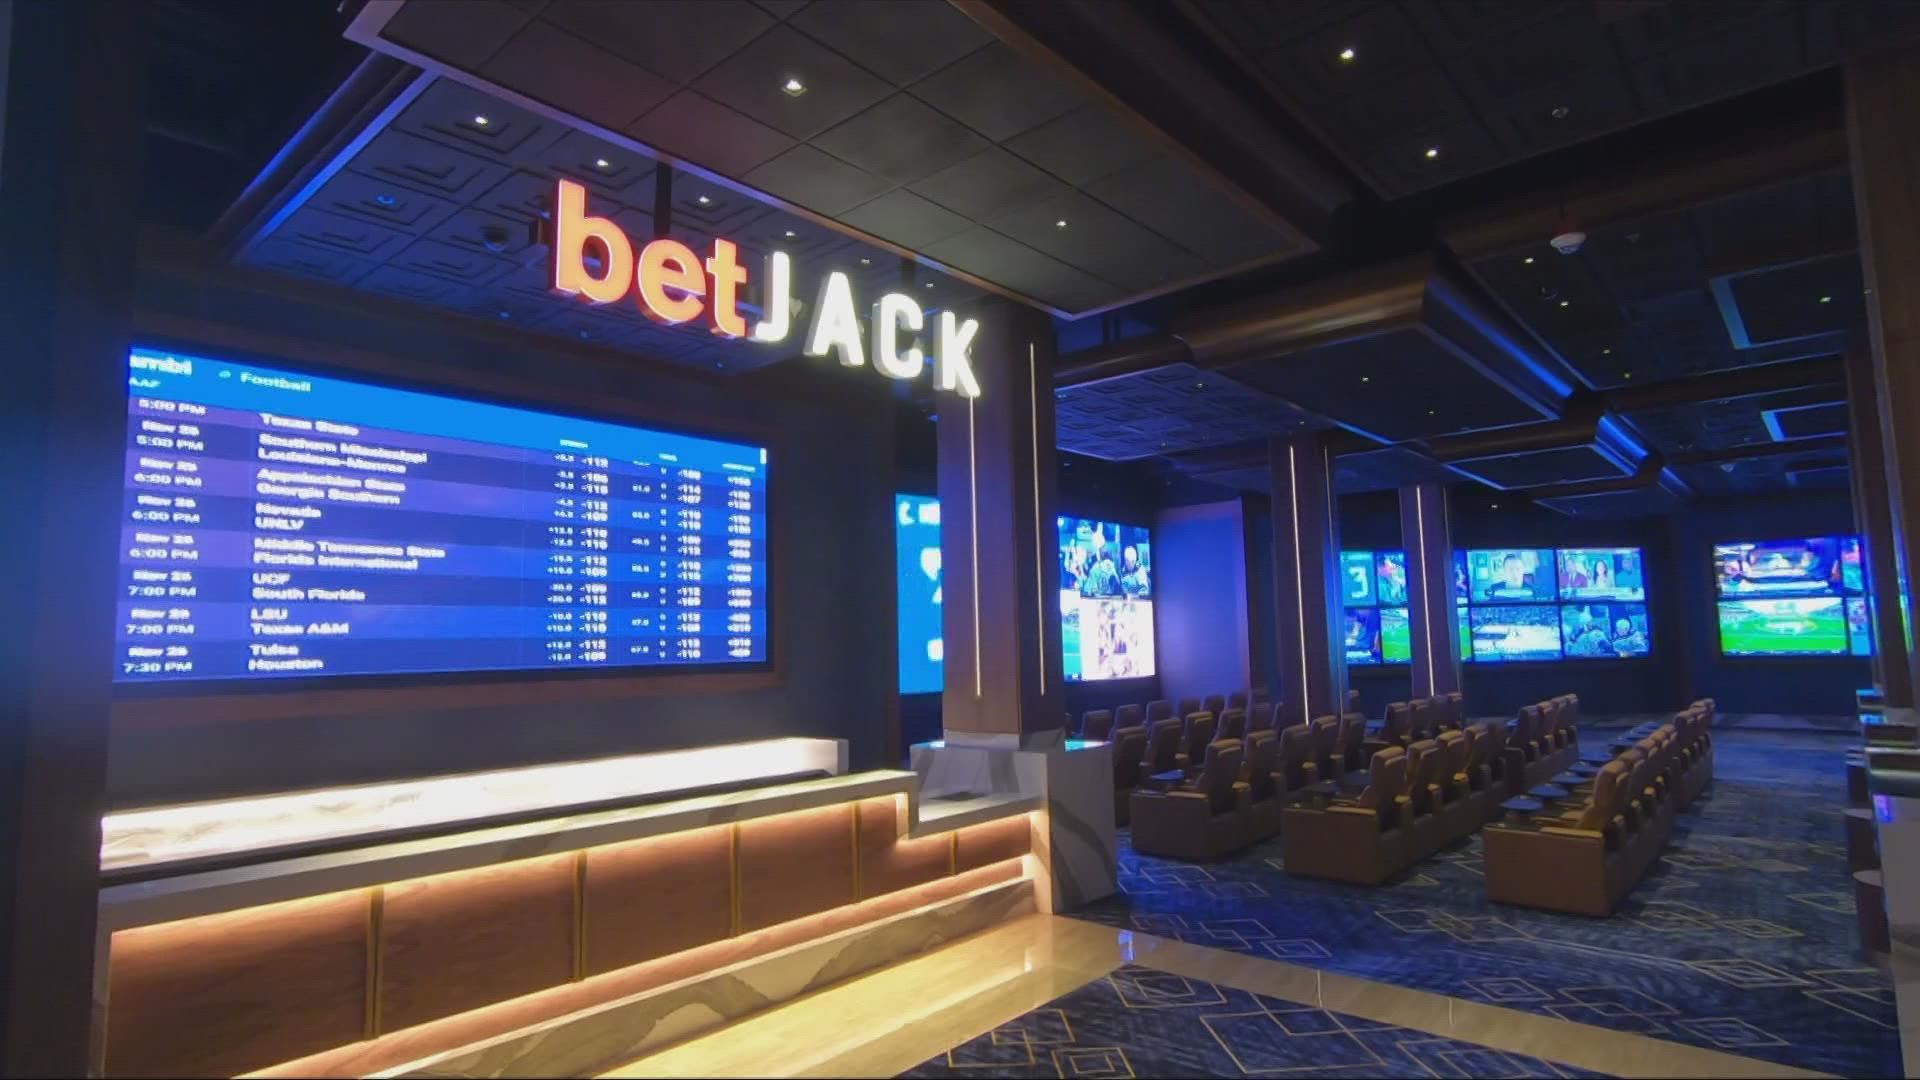 Sports betting will begin at midnight on Jan. 1, 2023.